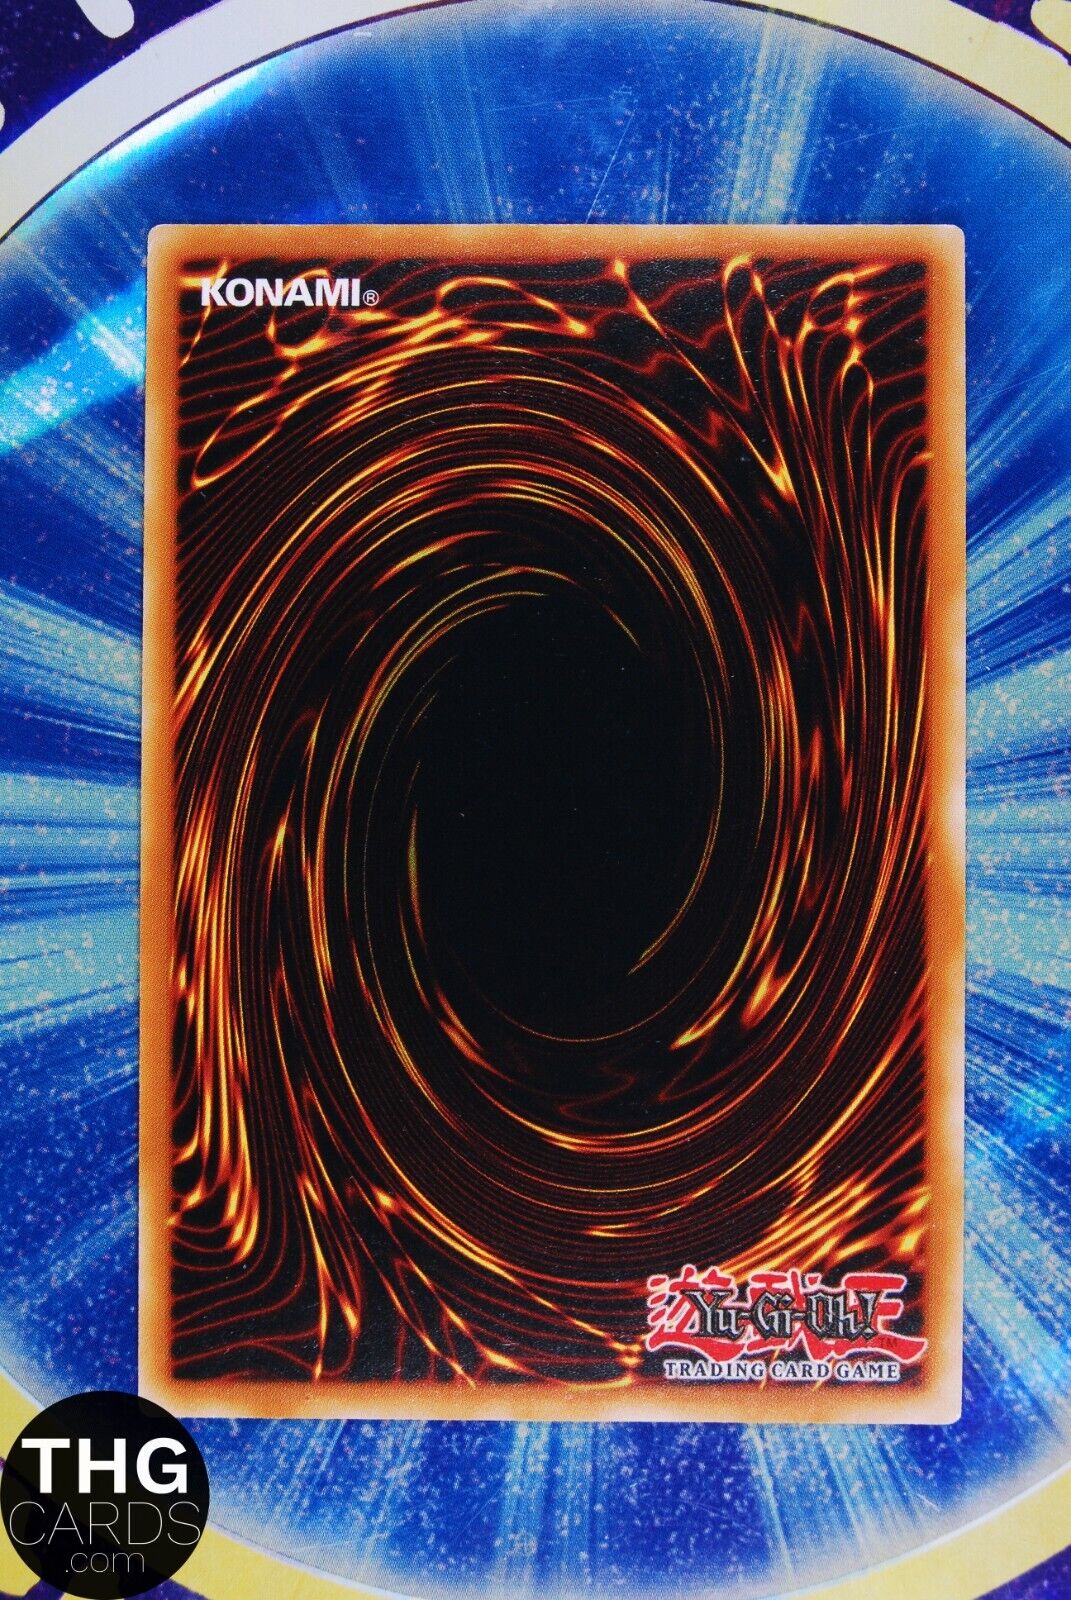 Slifer the Sky Dragon LDK2-ENS01 Ultra Rare Yugioh Card